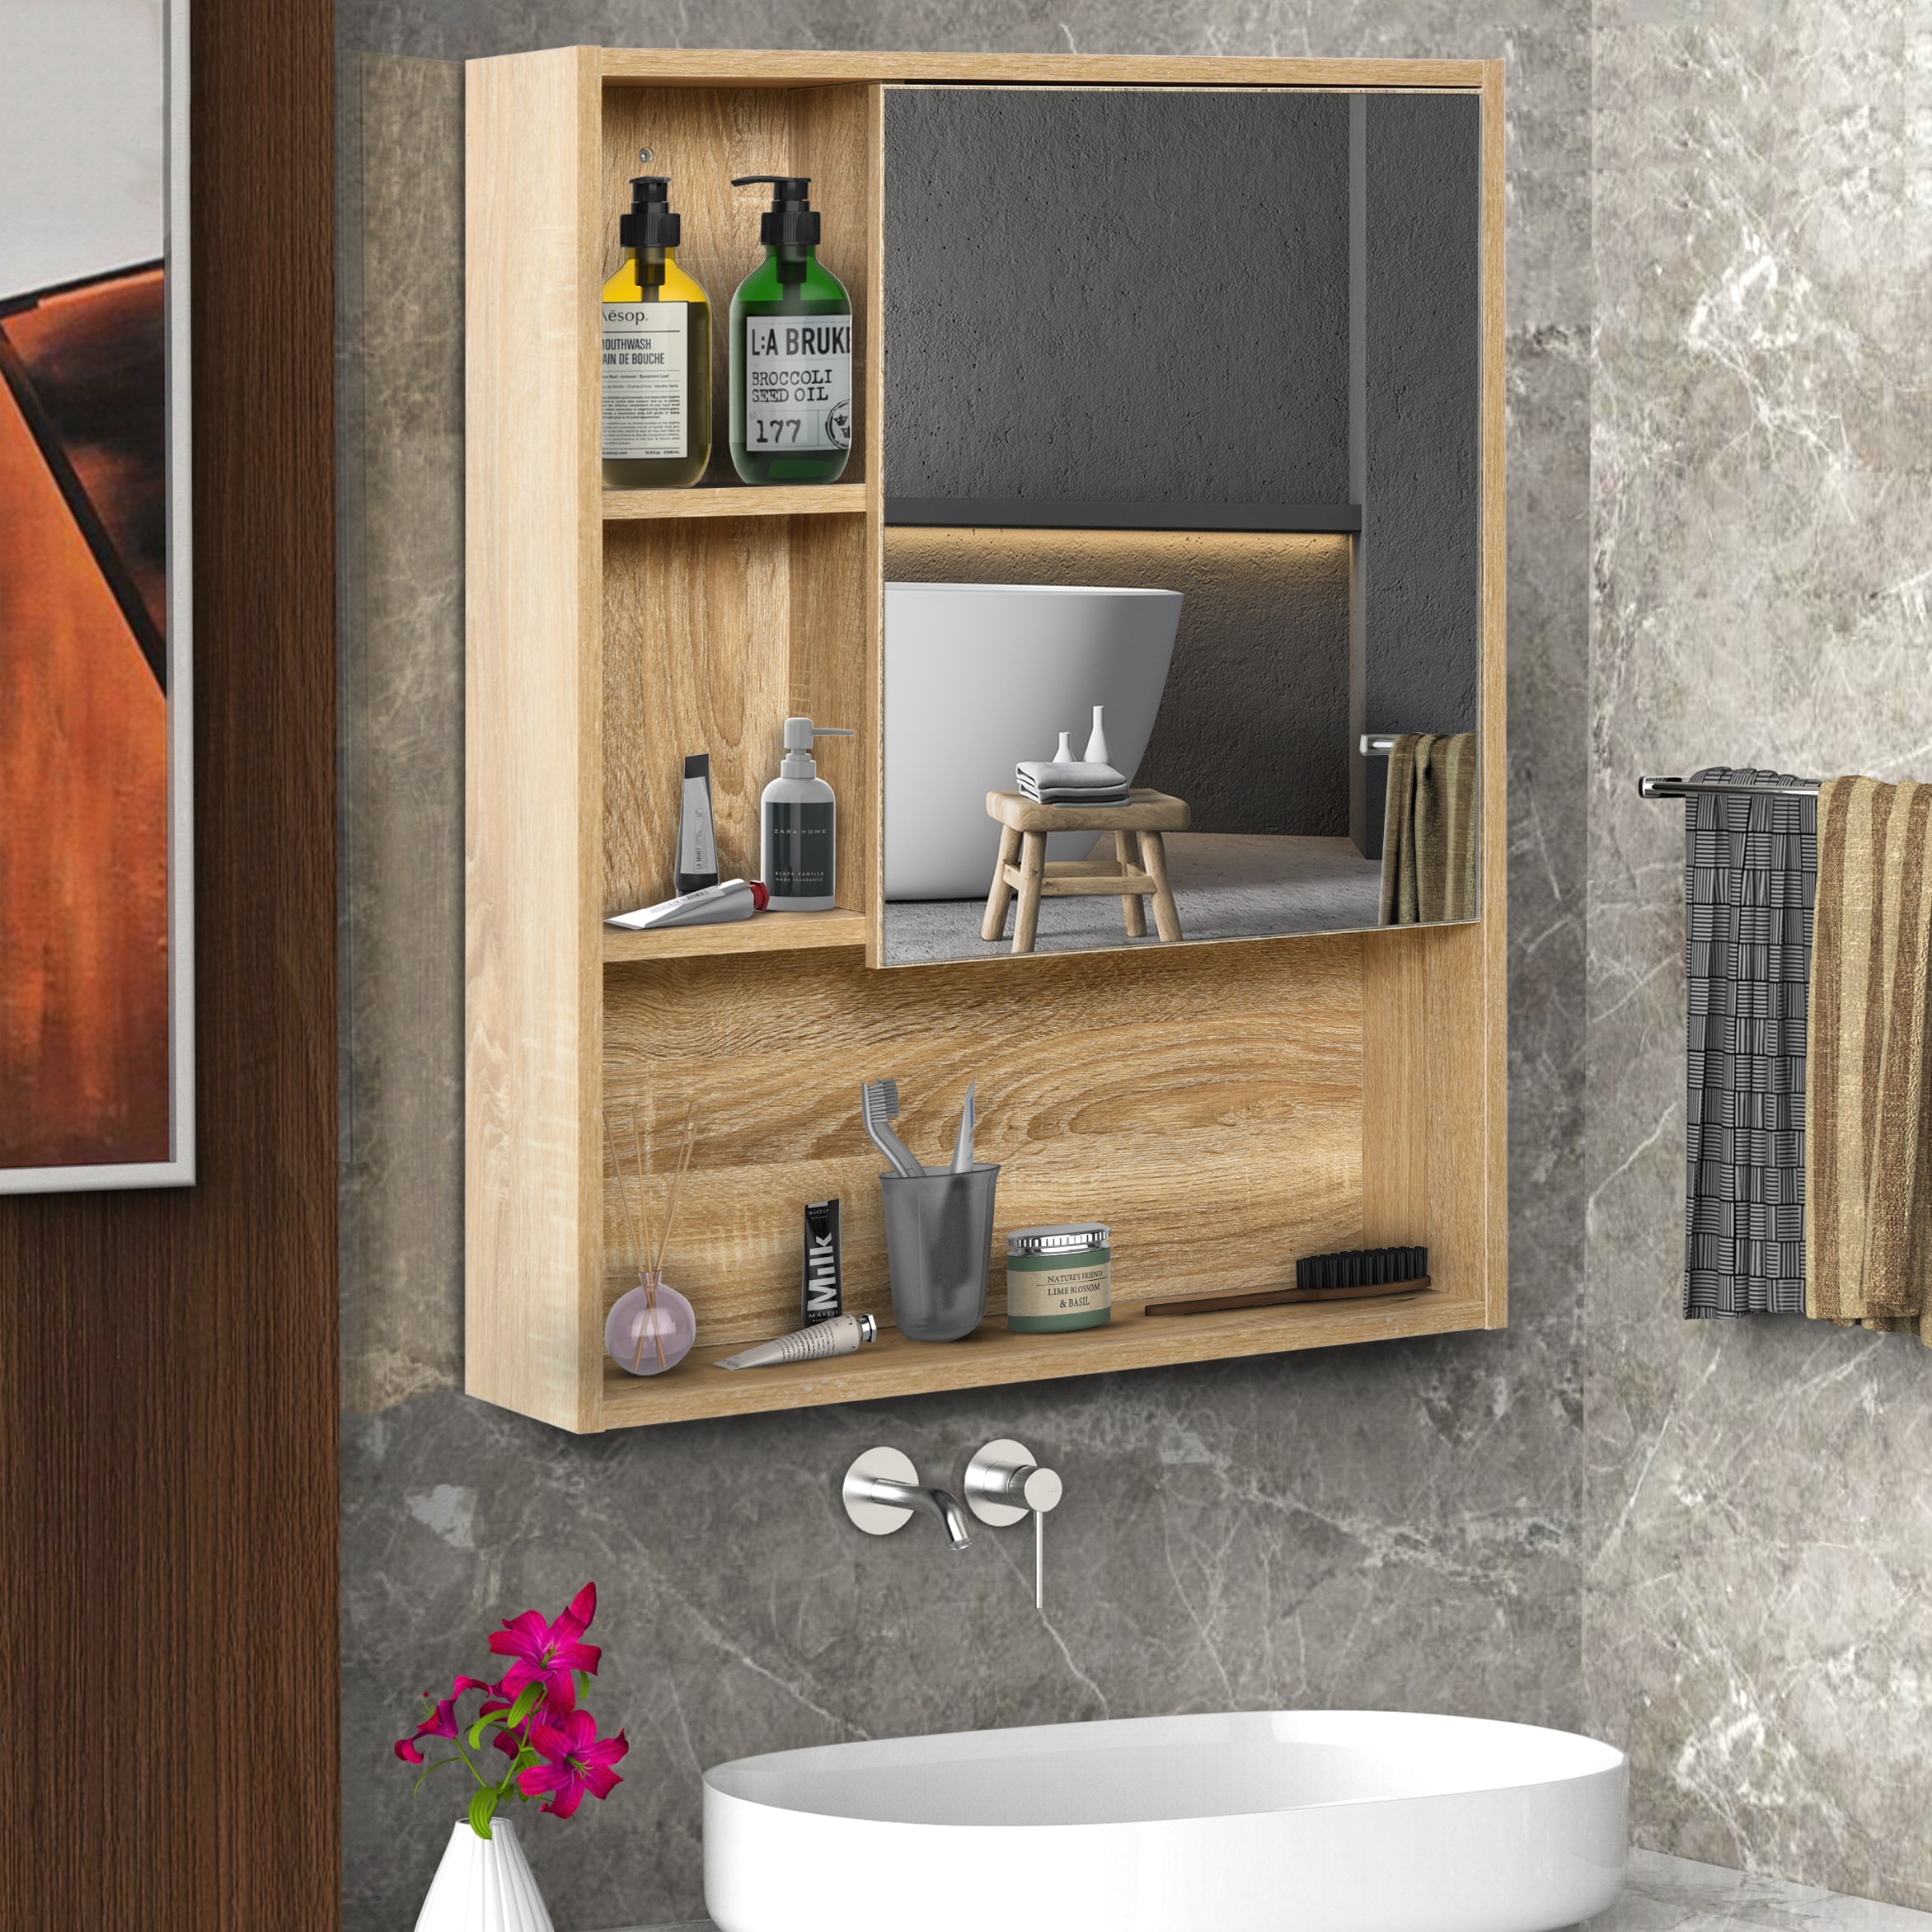 https://ak1.ostkcdn.com/images/products/is/images/direct/91120e4a01e081555d48a665793c0bcbfab8b4fd/kleankin-Wall-Mounted-Wooden-Storage-Bathroom-Medicine-Cabinet-with-Mirror-Glass-Door-Adjustable-Open-Shelf-Oak-Grain.jpg